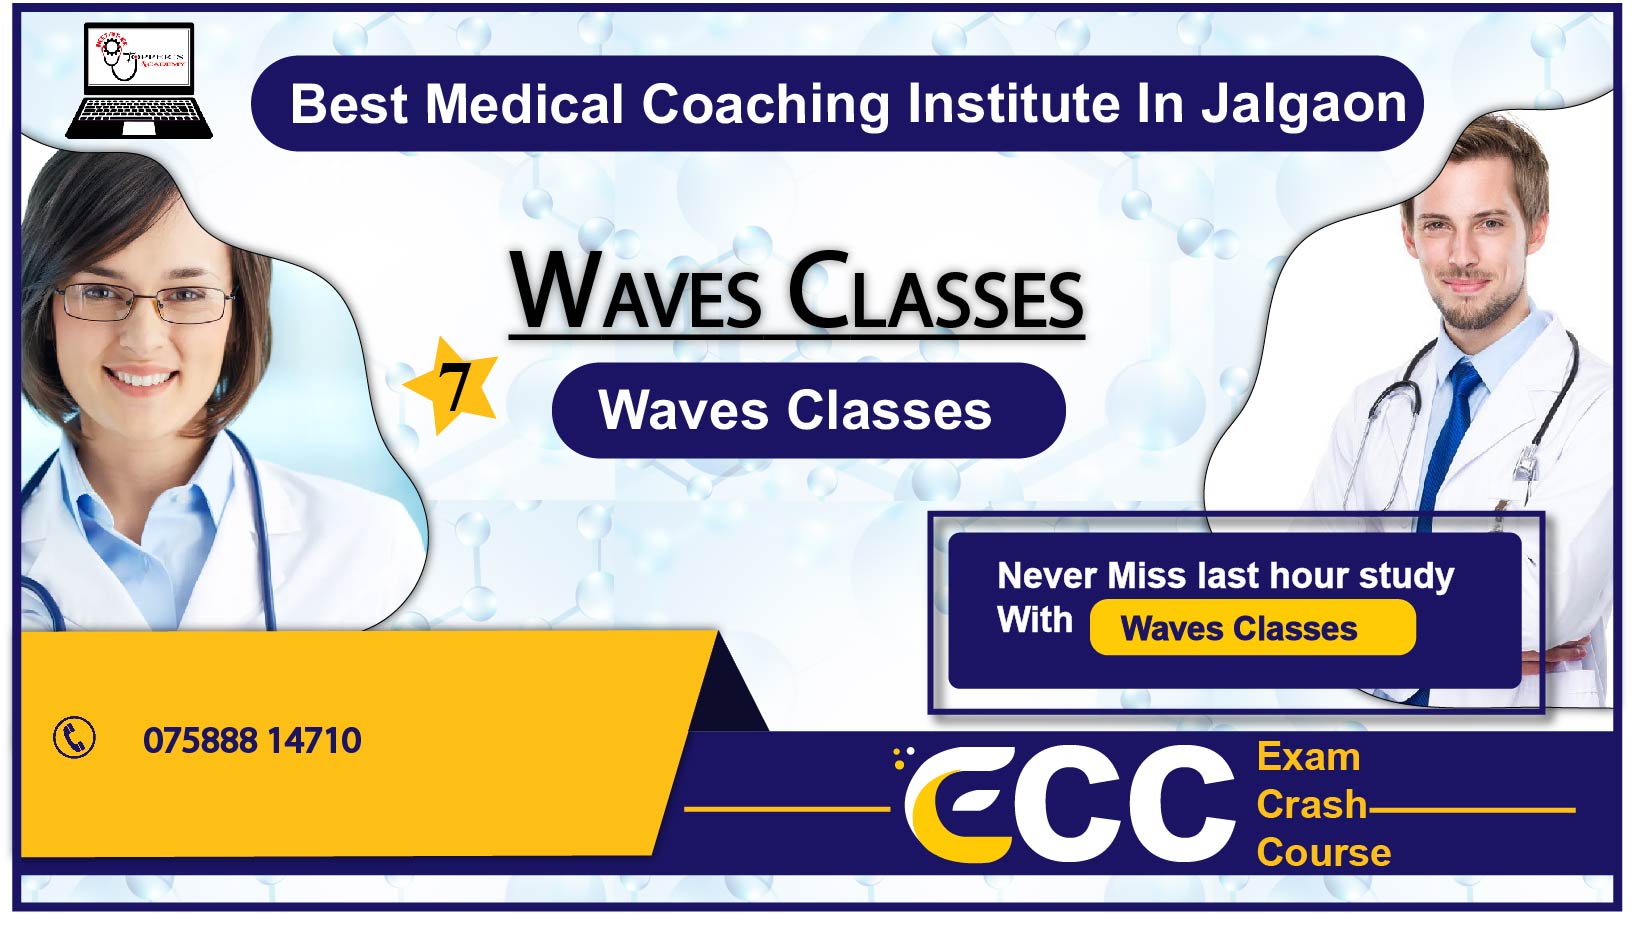 Waves Classes NEET Coaching in Jalgaon